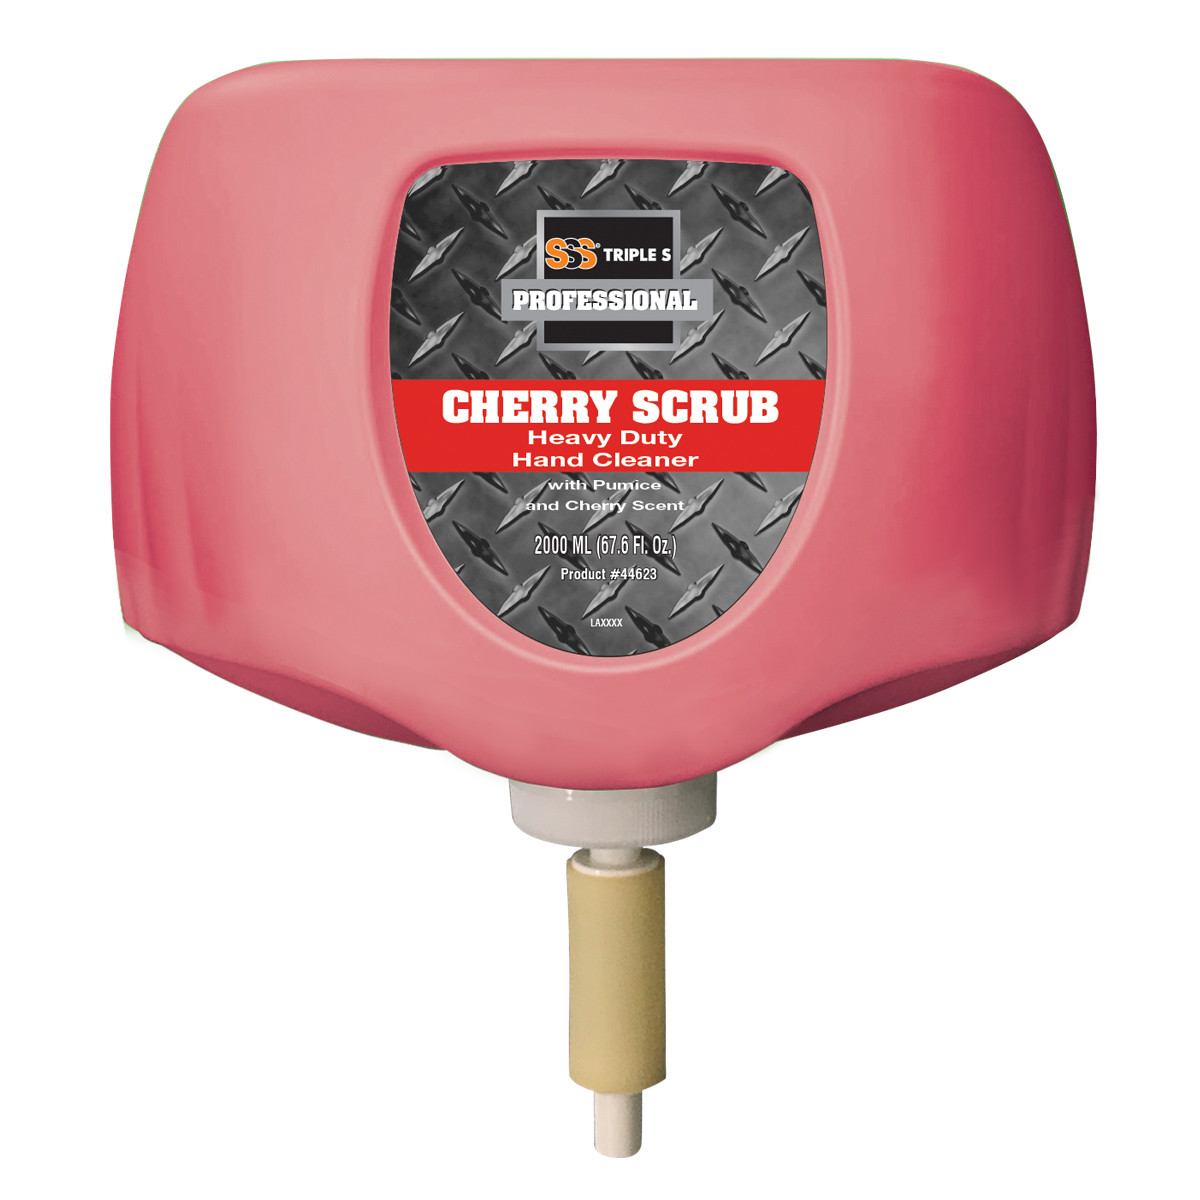 SSS CleanView Cherry Scrub
Heavy Duty Hand Cleaner,
2000ml - (4/cs)